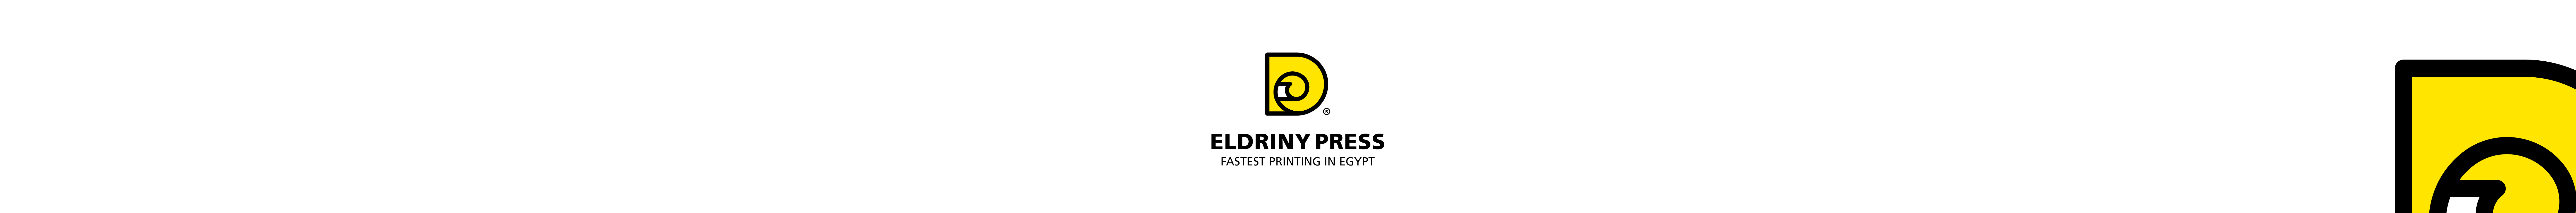 Eldriny Press's profile banner